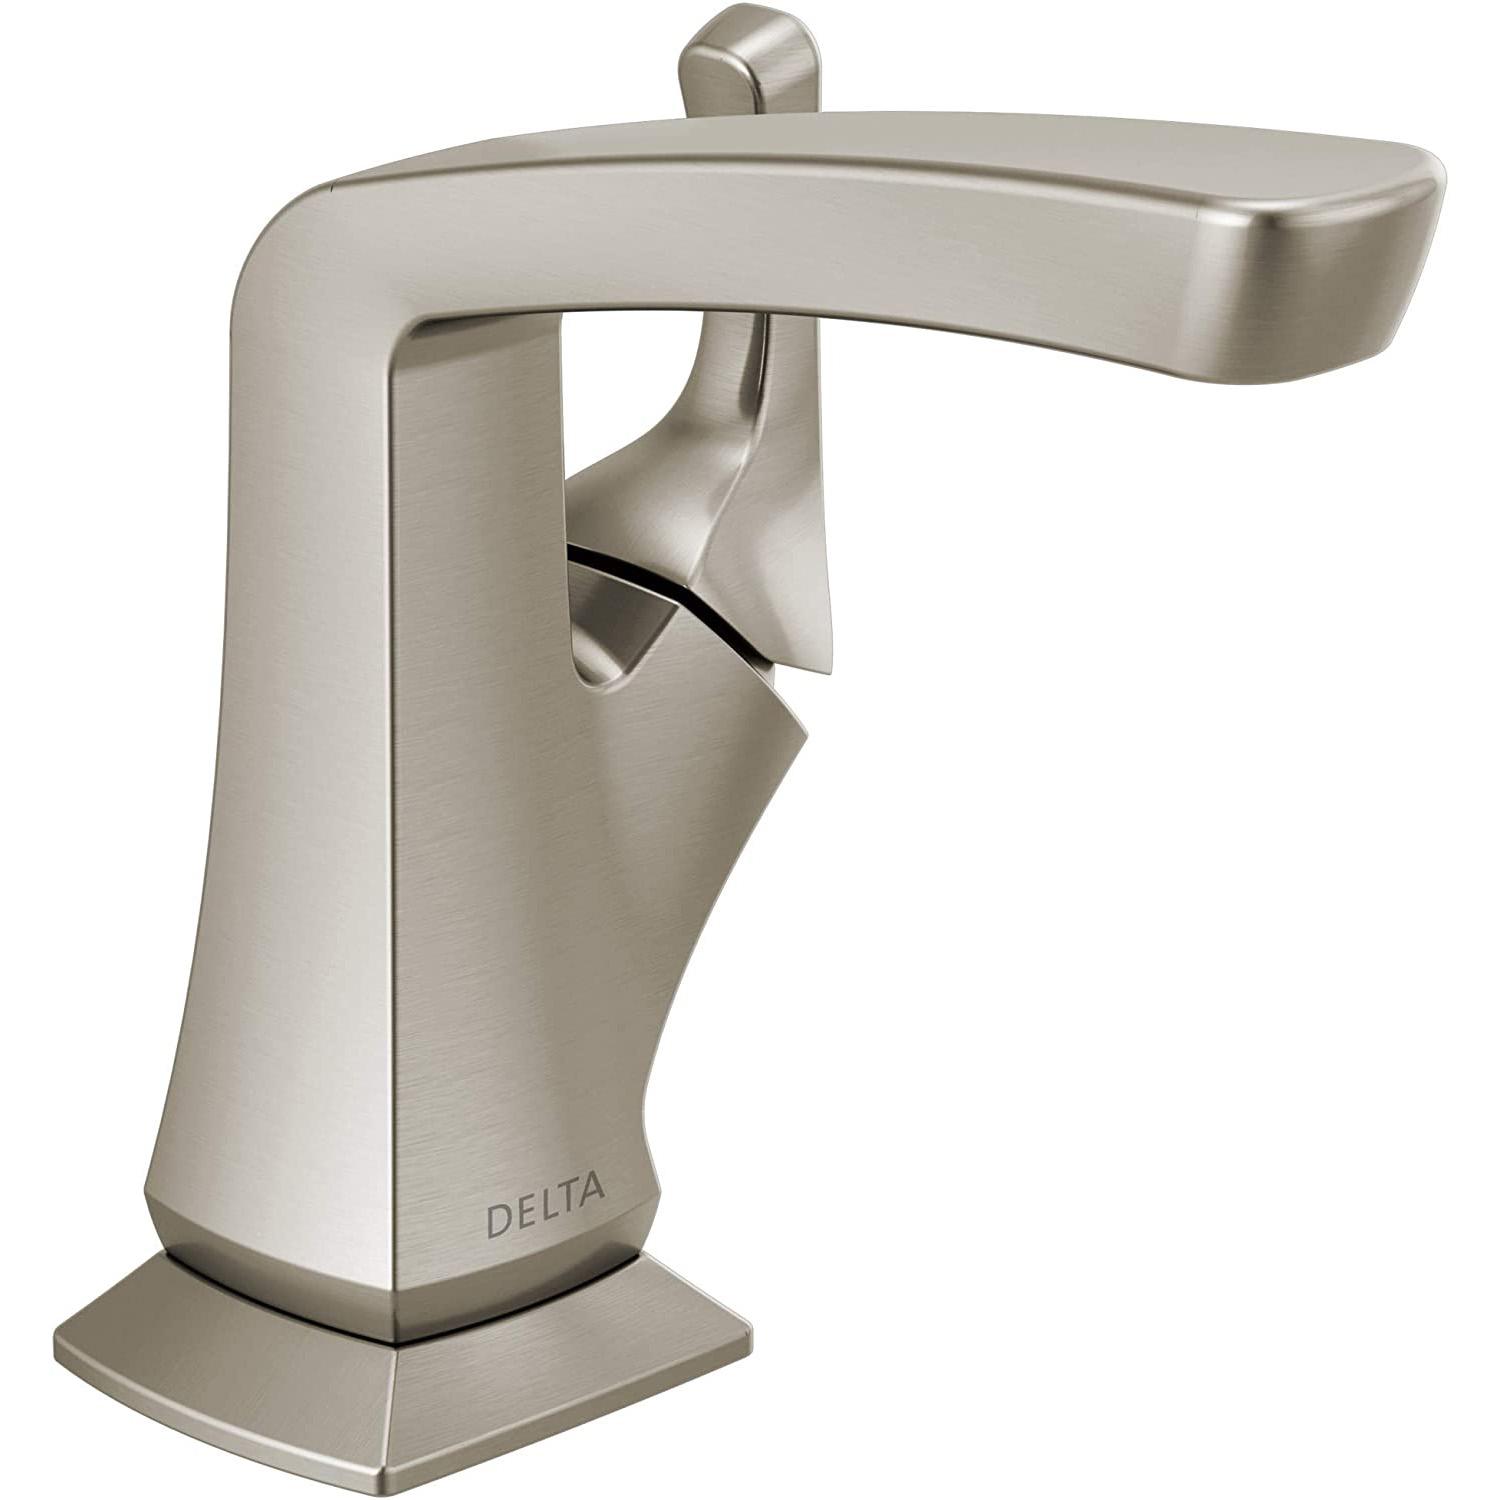 Delta Faucet Vesna Single Hole Bathroom Faucet for $59.40 Shipped